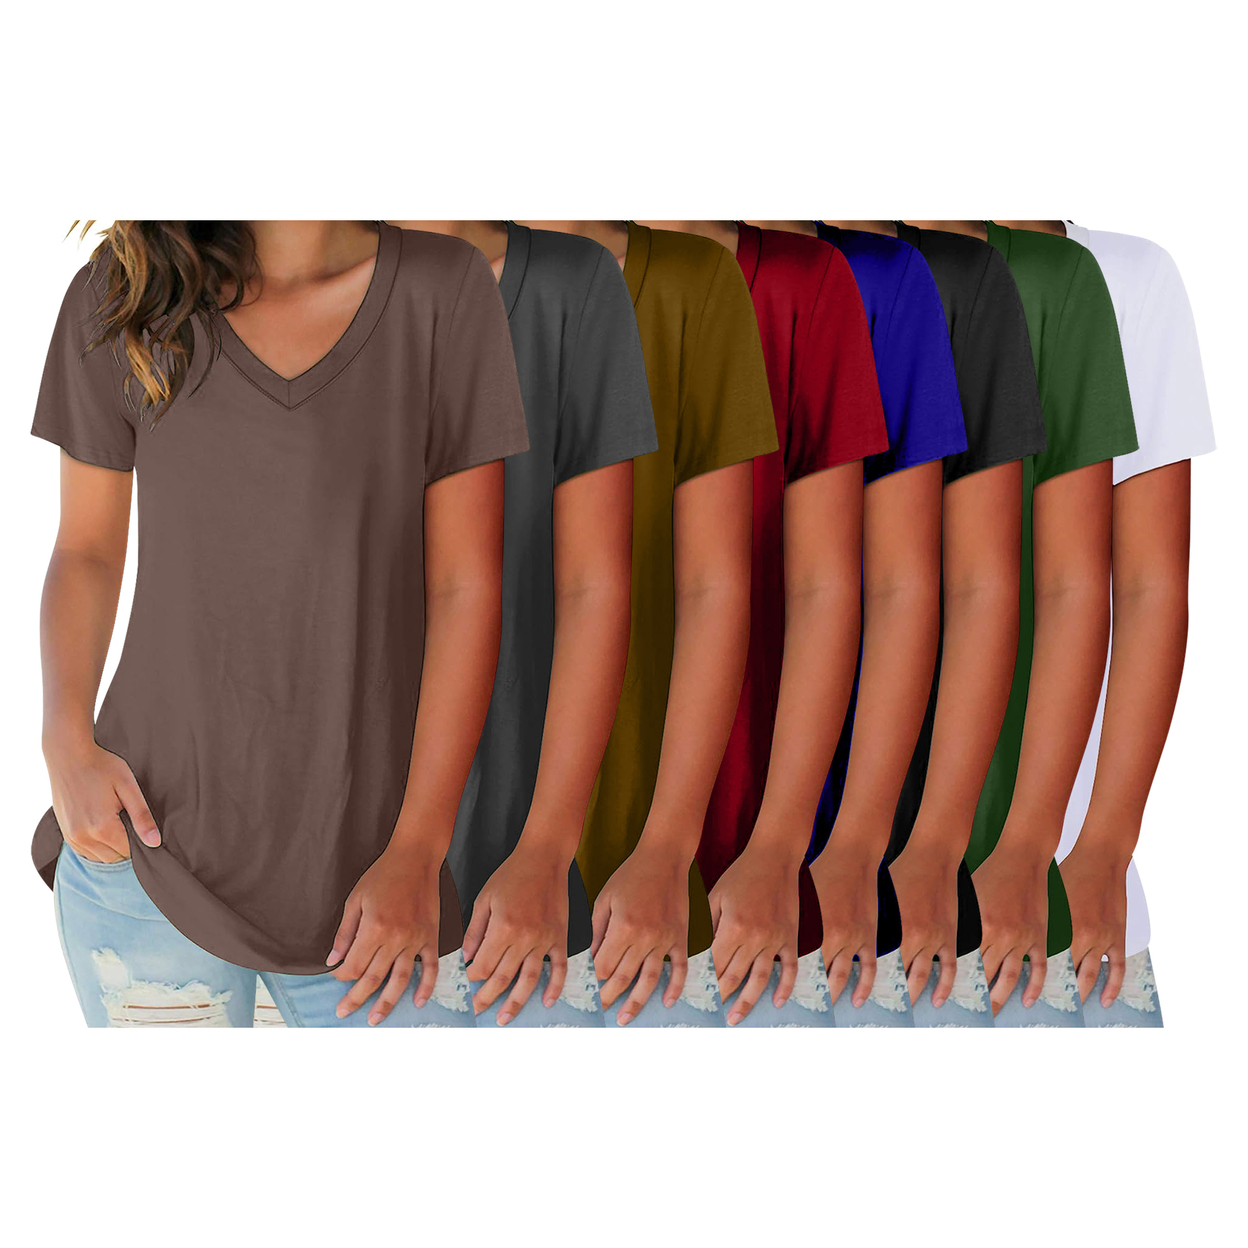 2-Pack: Women's Ultra Soft Smooth Cotton Blend Basic V-Neck Short Sleeve Shirts - Grey & Brown, X-large